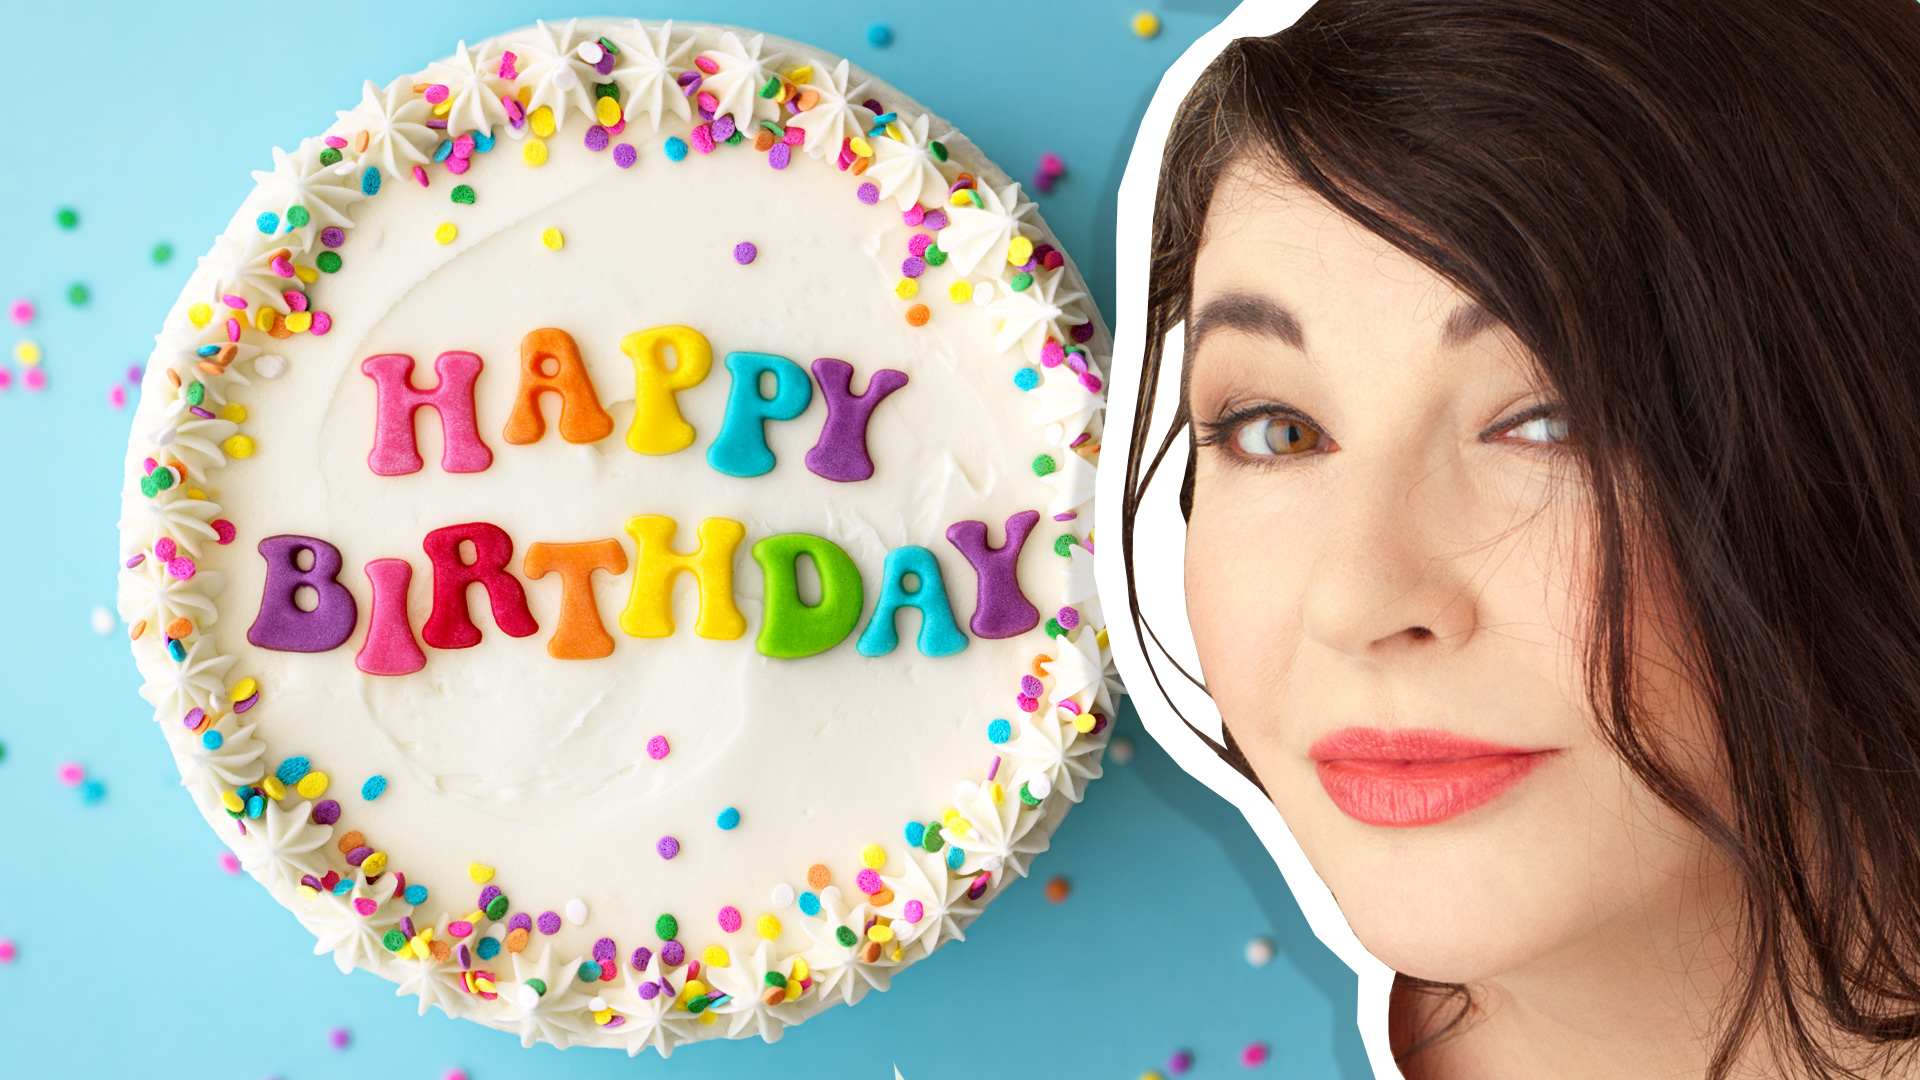 Kate Bush and a birthday cake